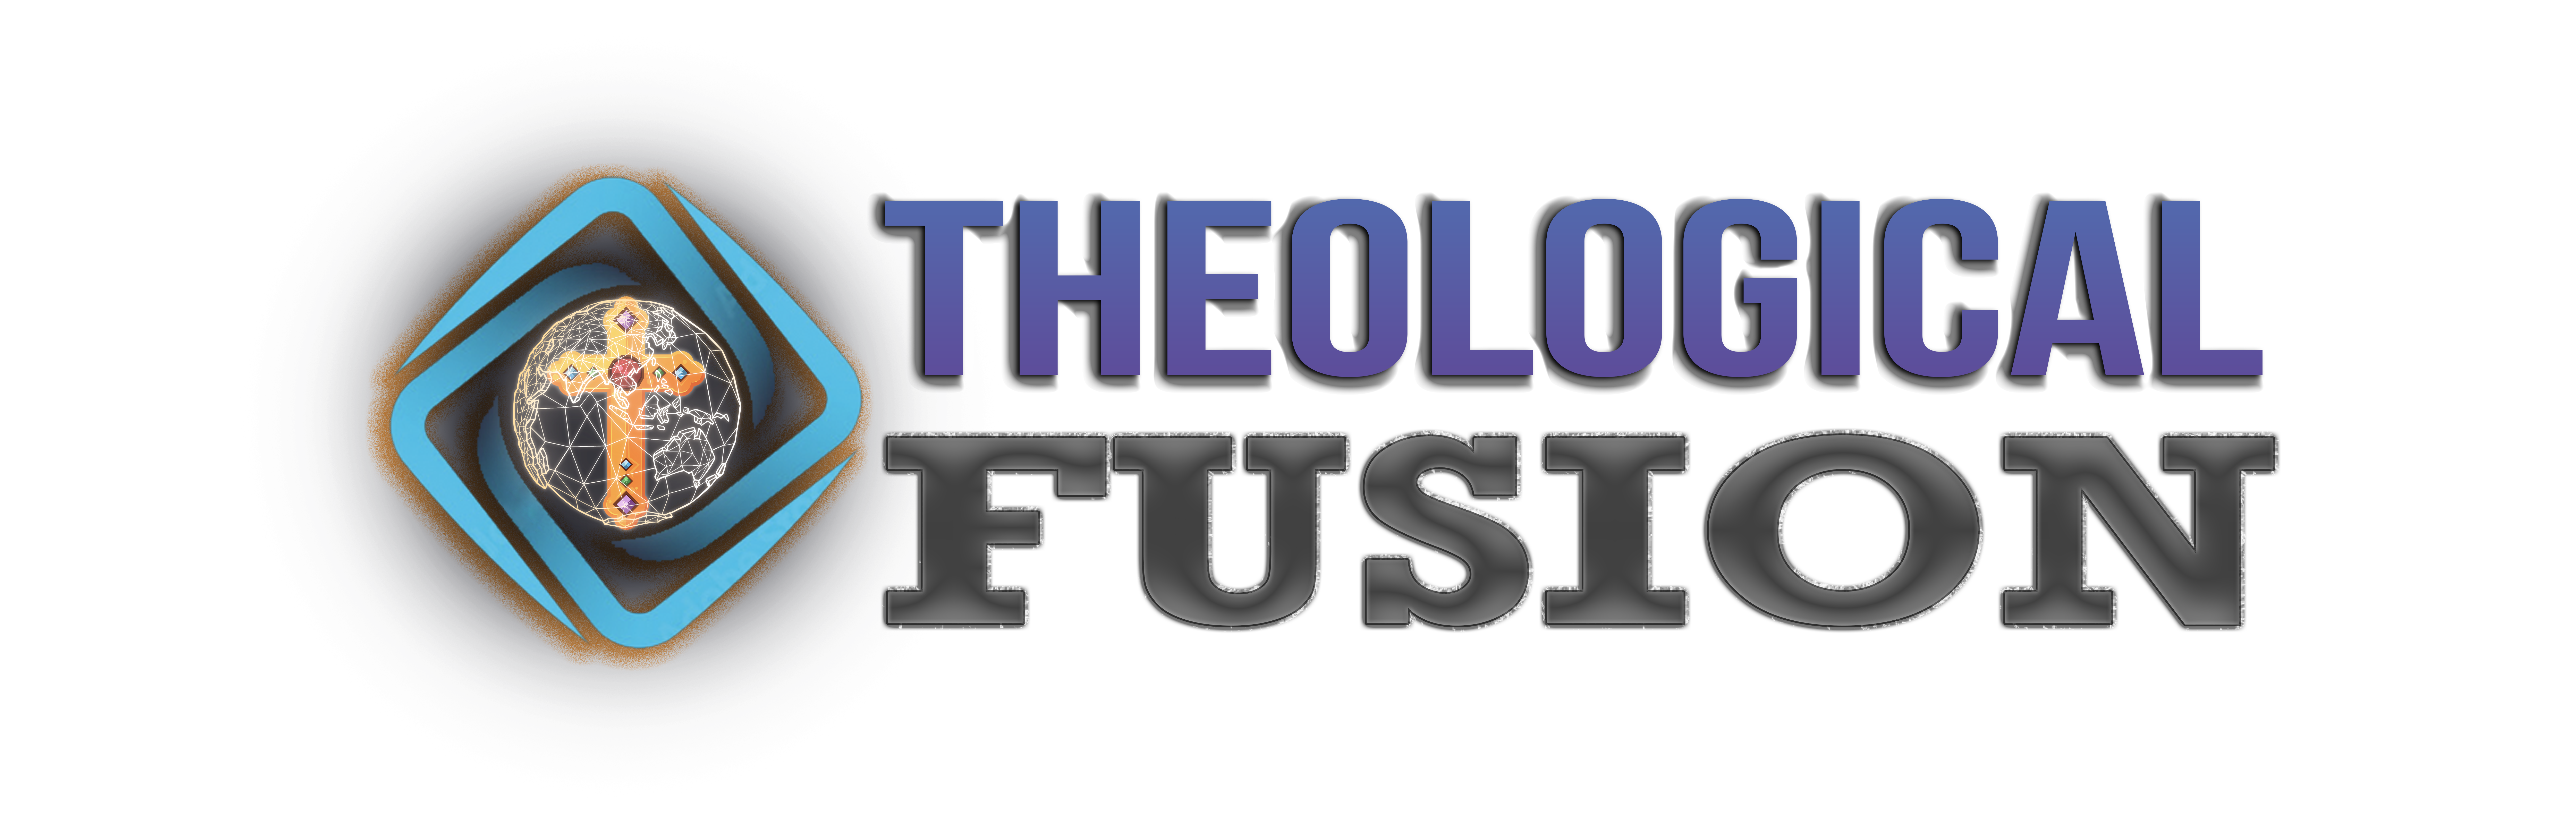 theologicalfusion.com